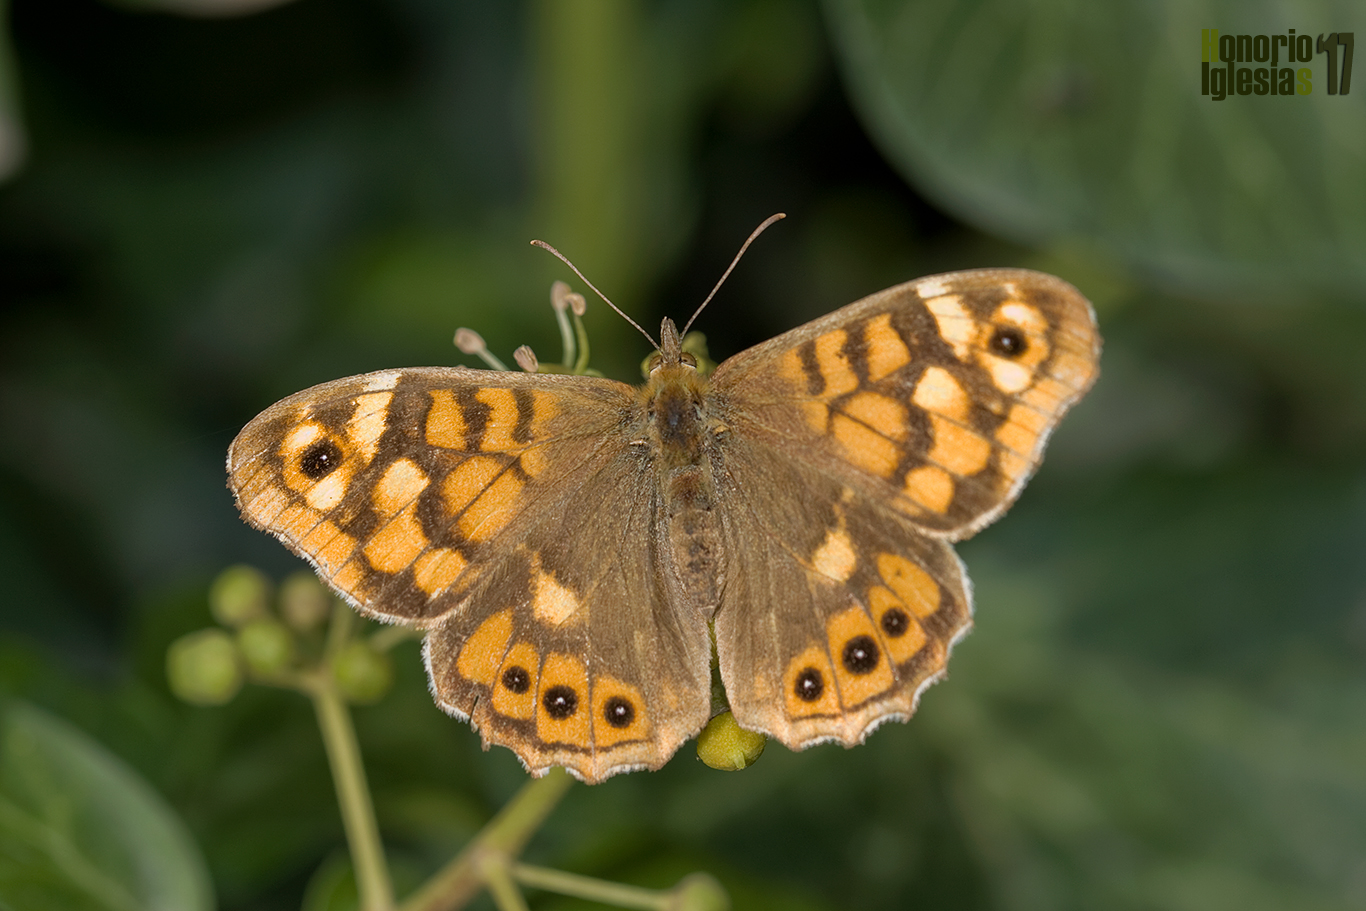 Hembra de mariposa ondulada o maculada (Pararge aegeria) mostrando su anverso alar.